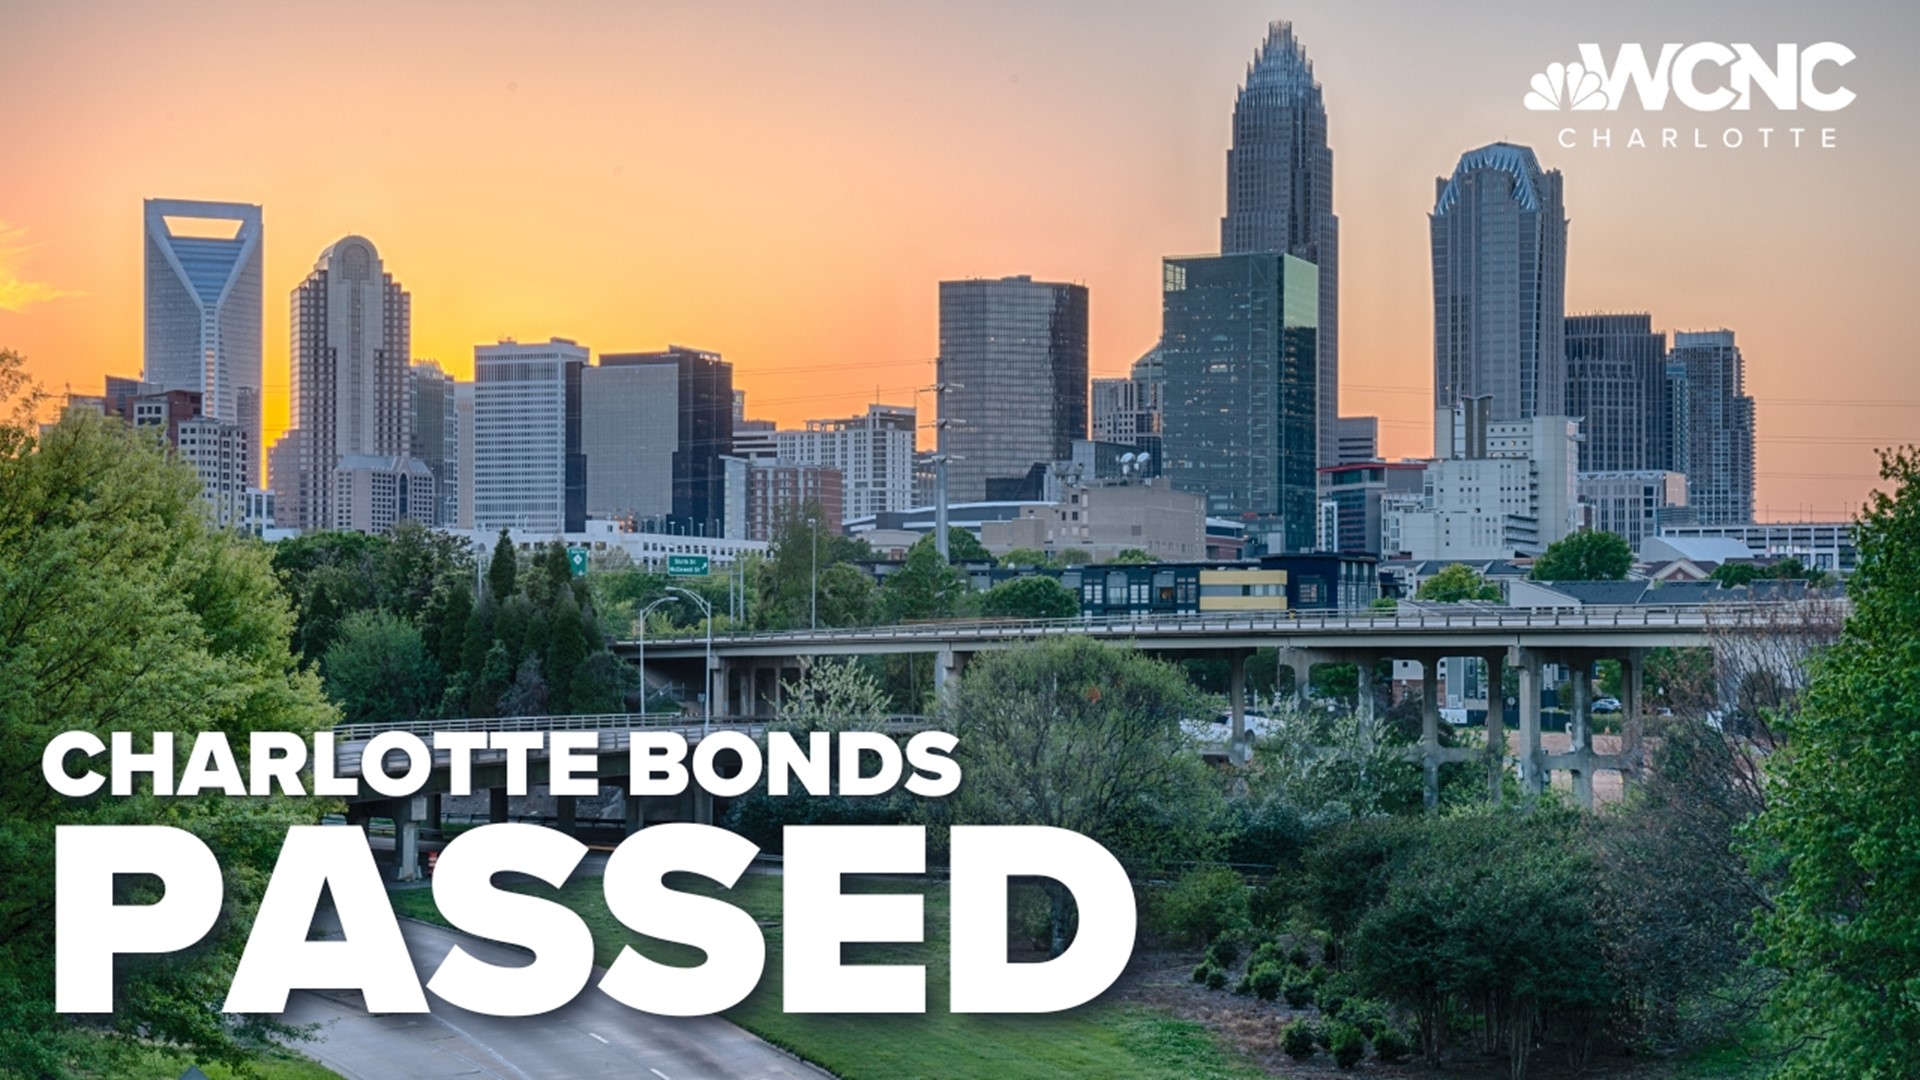 Charlotte voters passed three city bonds totaling $226 million.